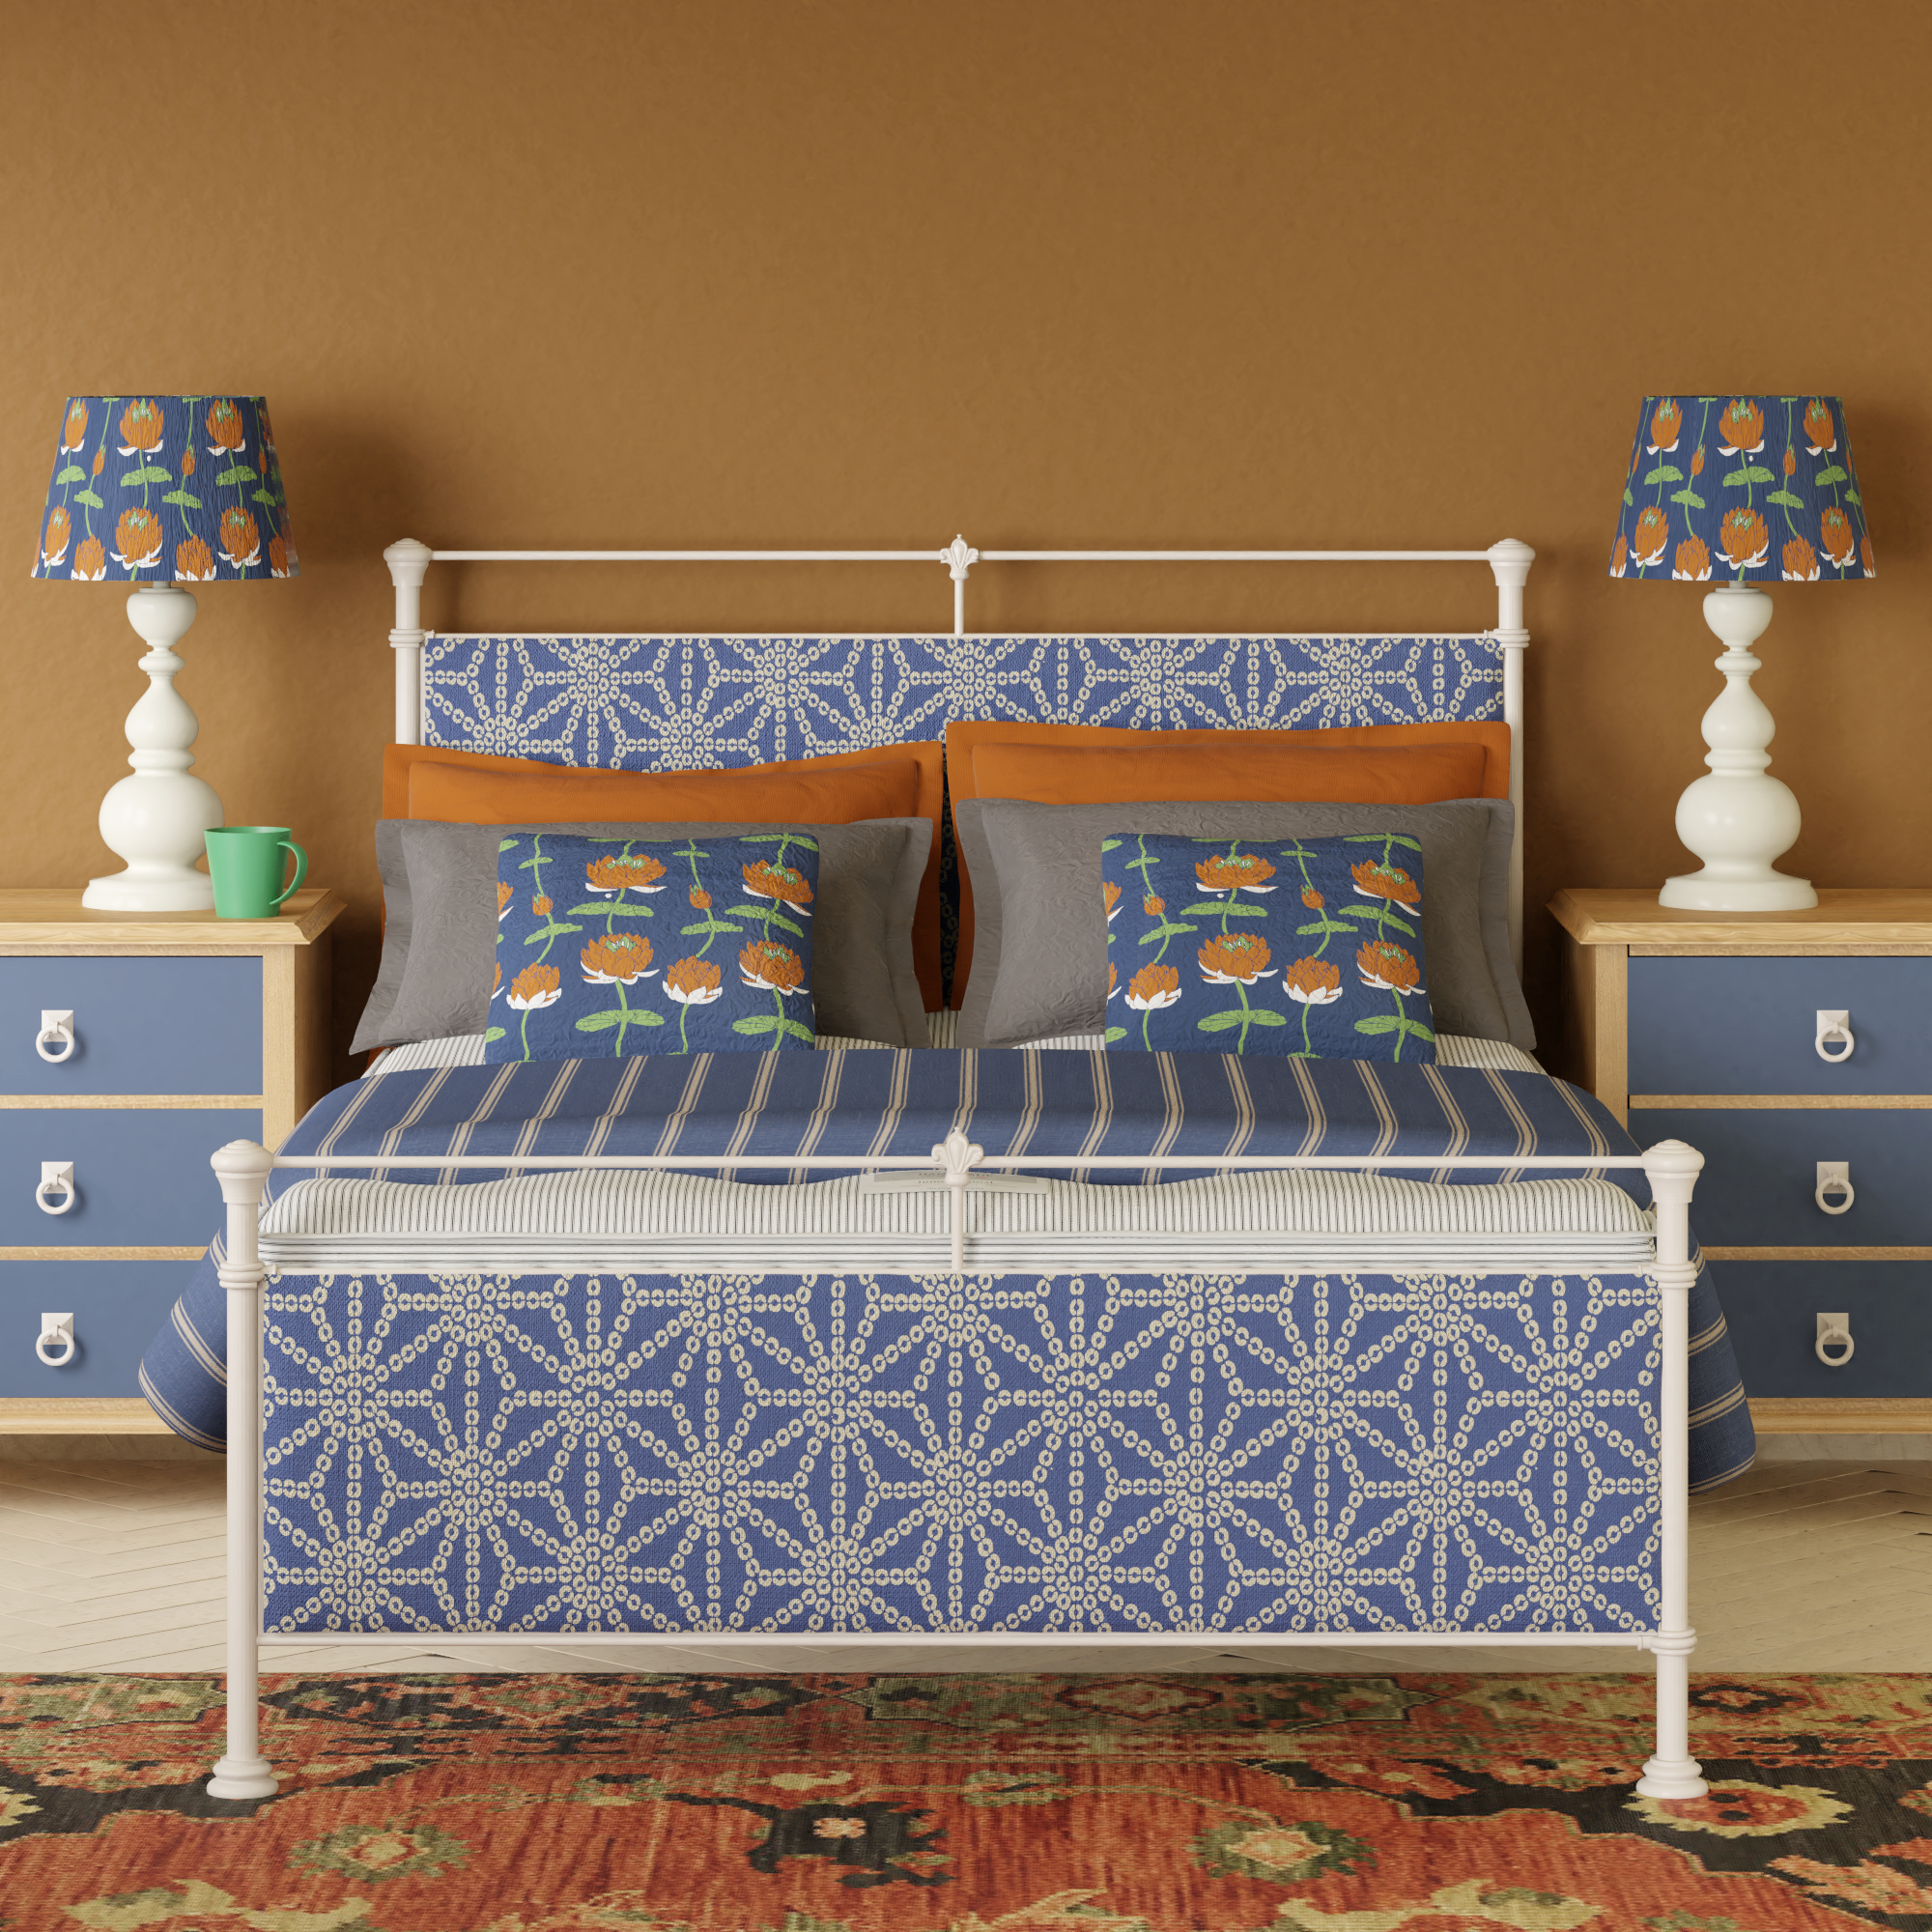 Nancy iron bed - Image blue and orange bedroom